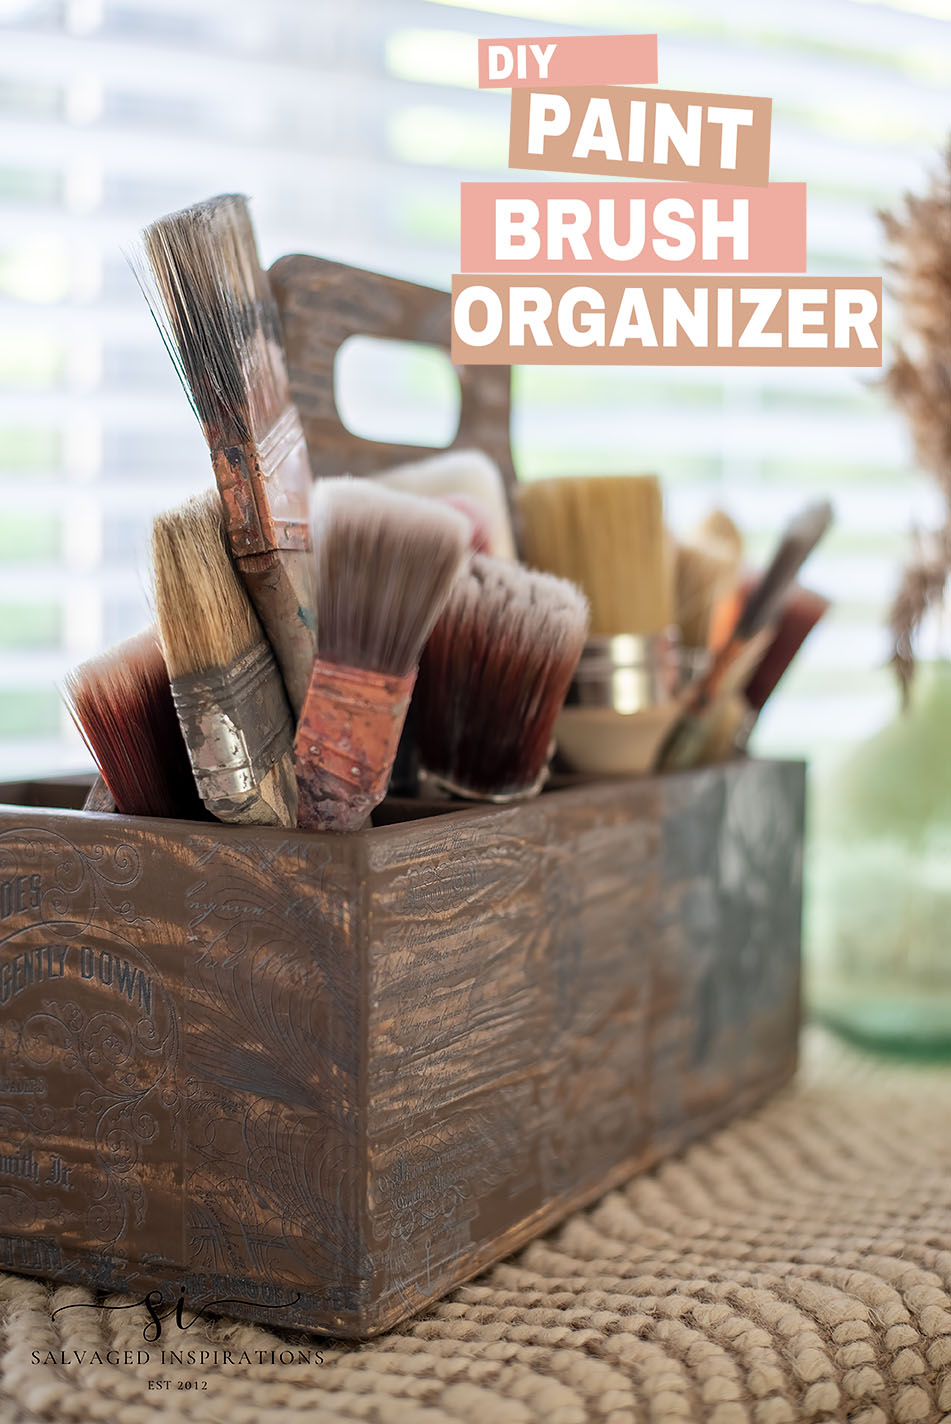 DIY Paint Brush Organizer - Salvaged Inspirations